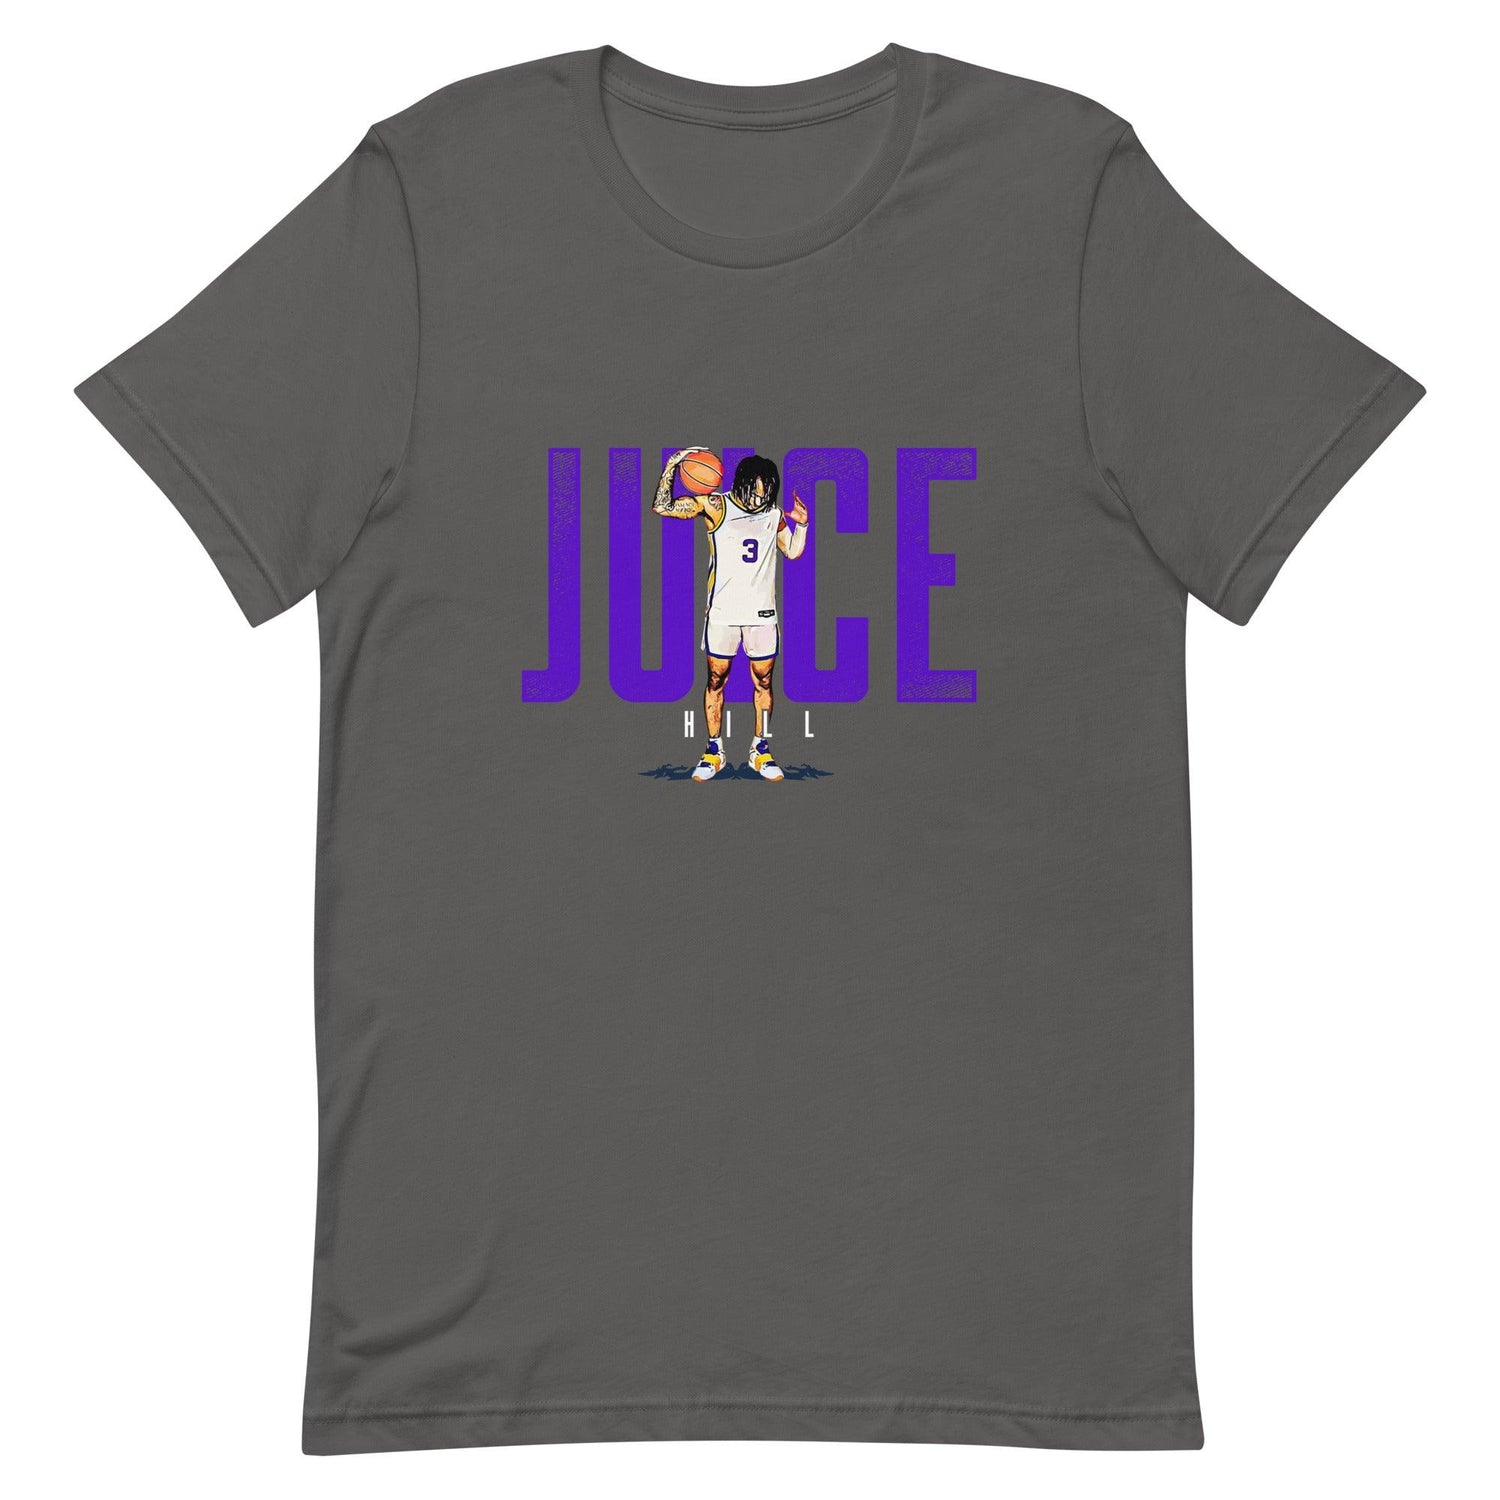 Justice Hill “Juice” t-shirt - Fan Arch